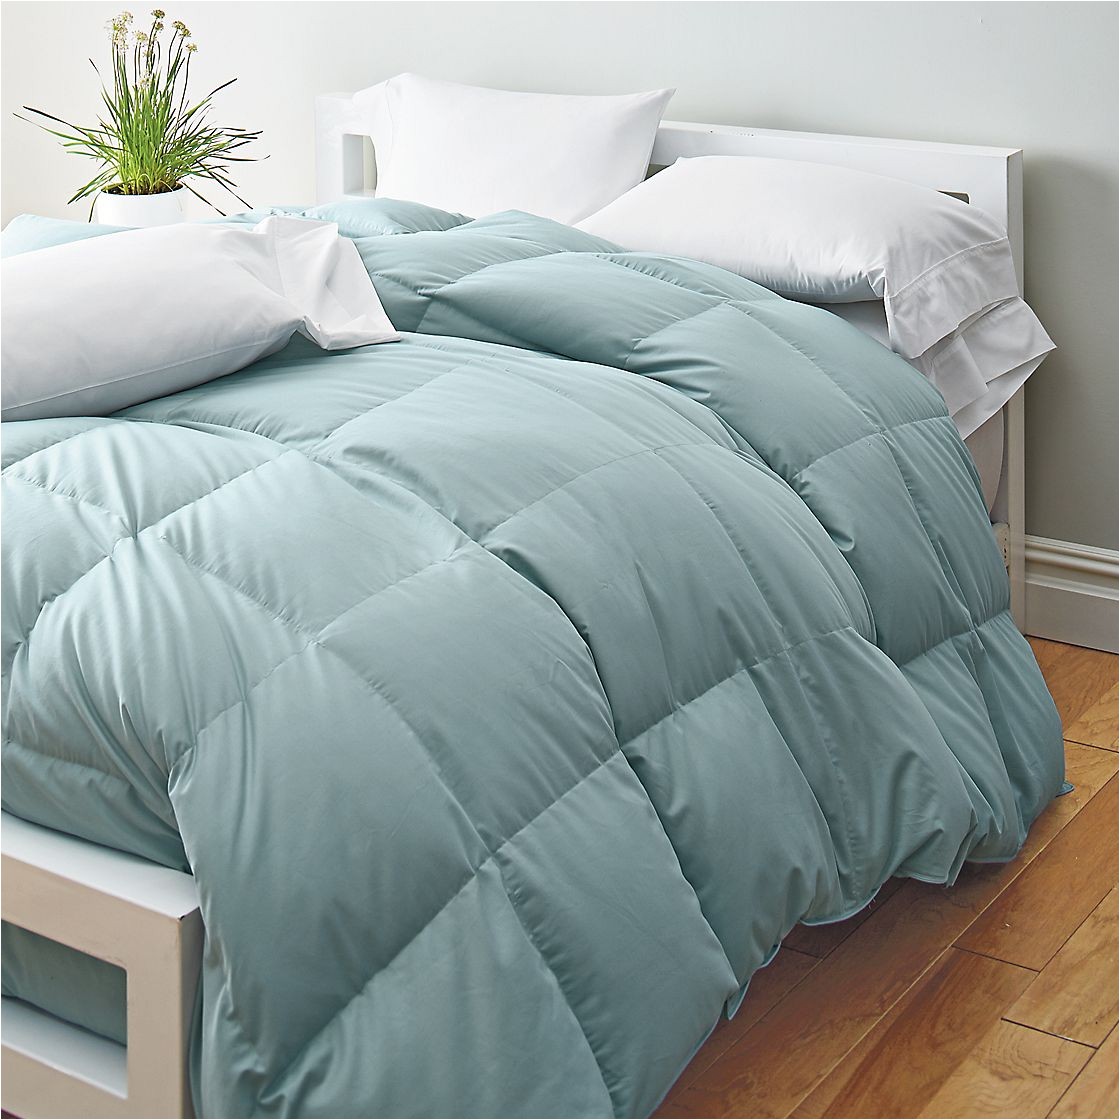 Most Fluffy Down Alternative Comforter | AdinaPorter